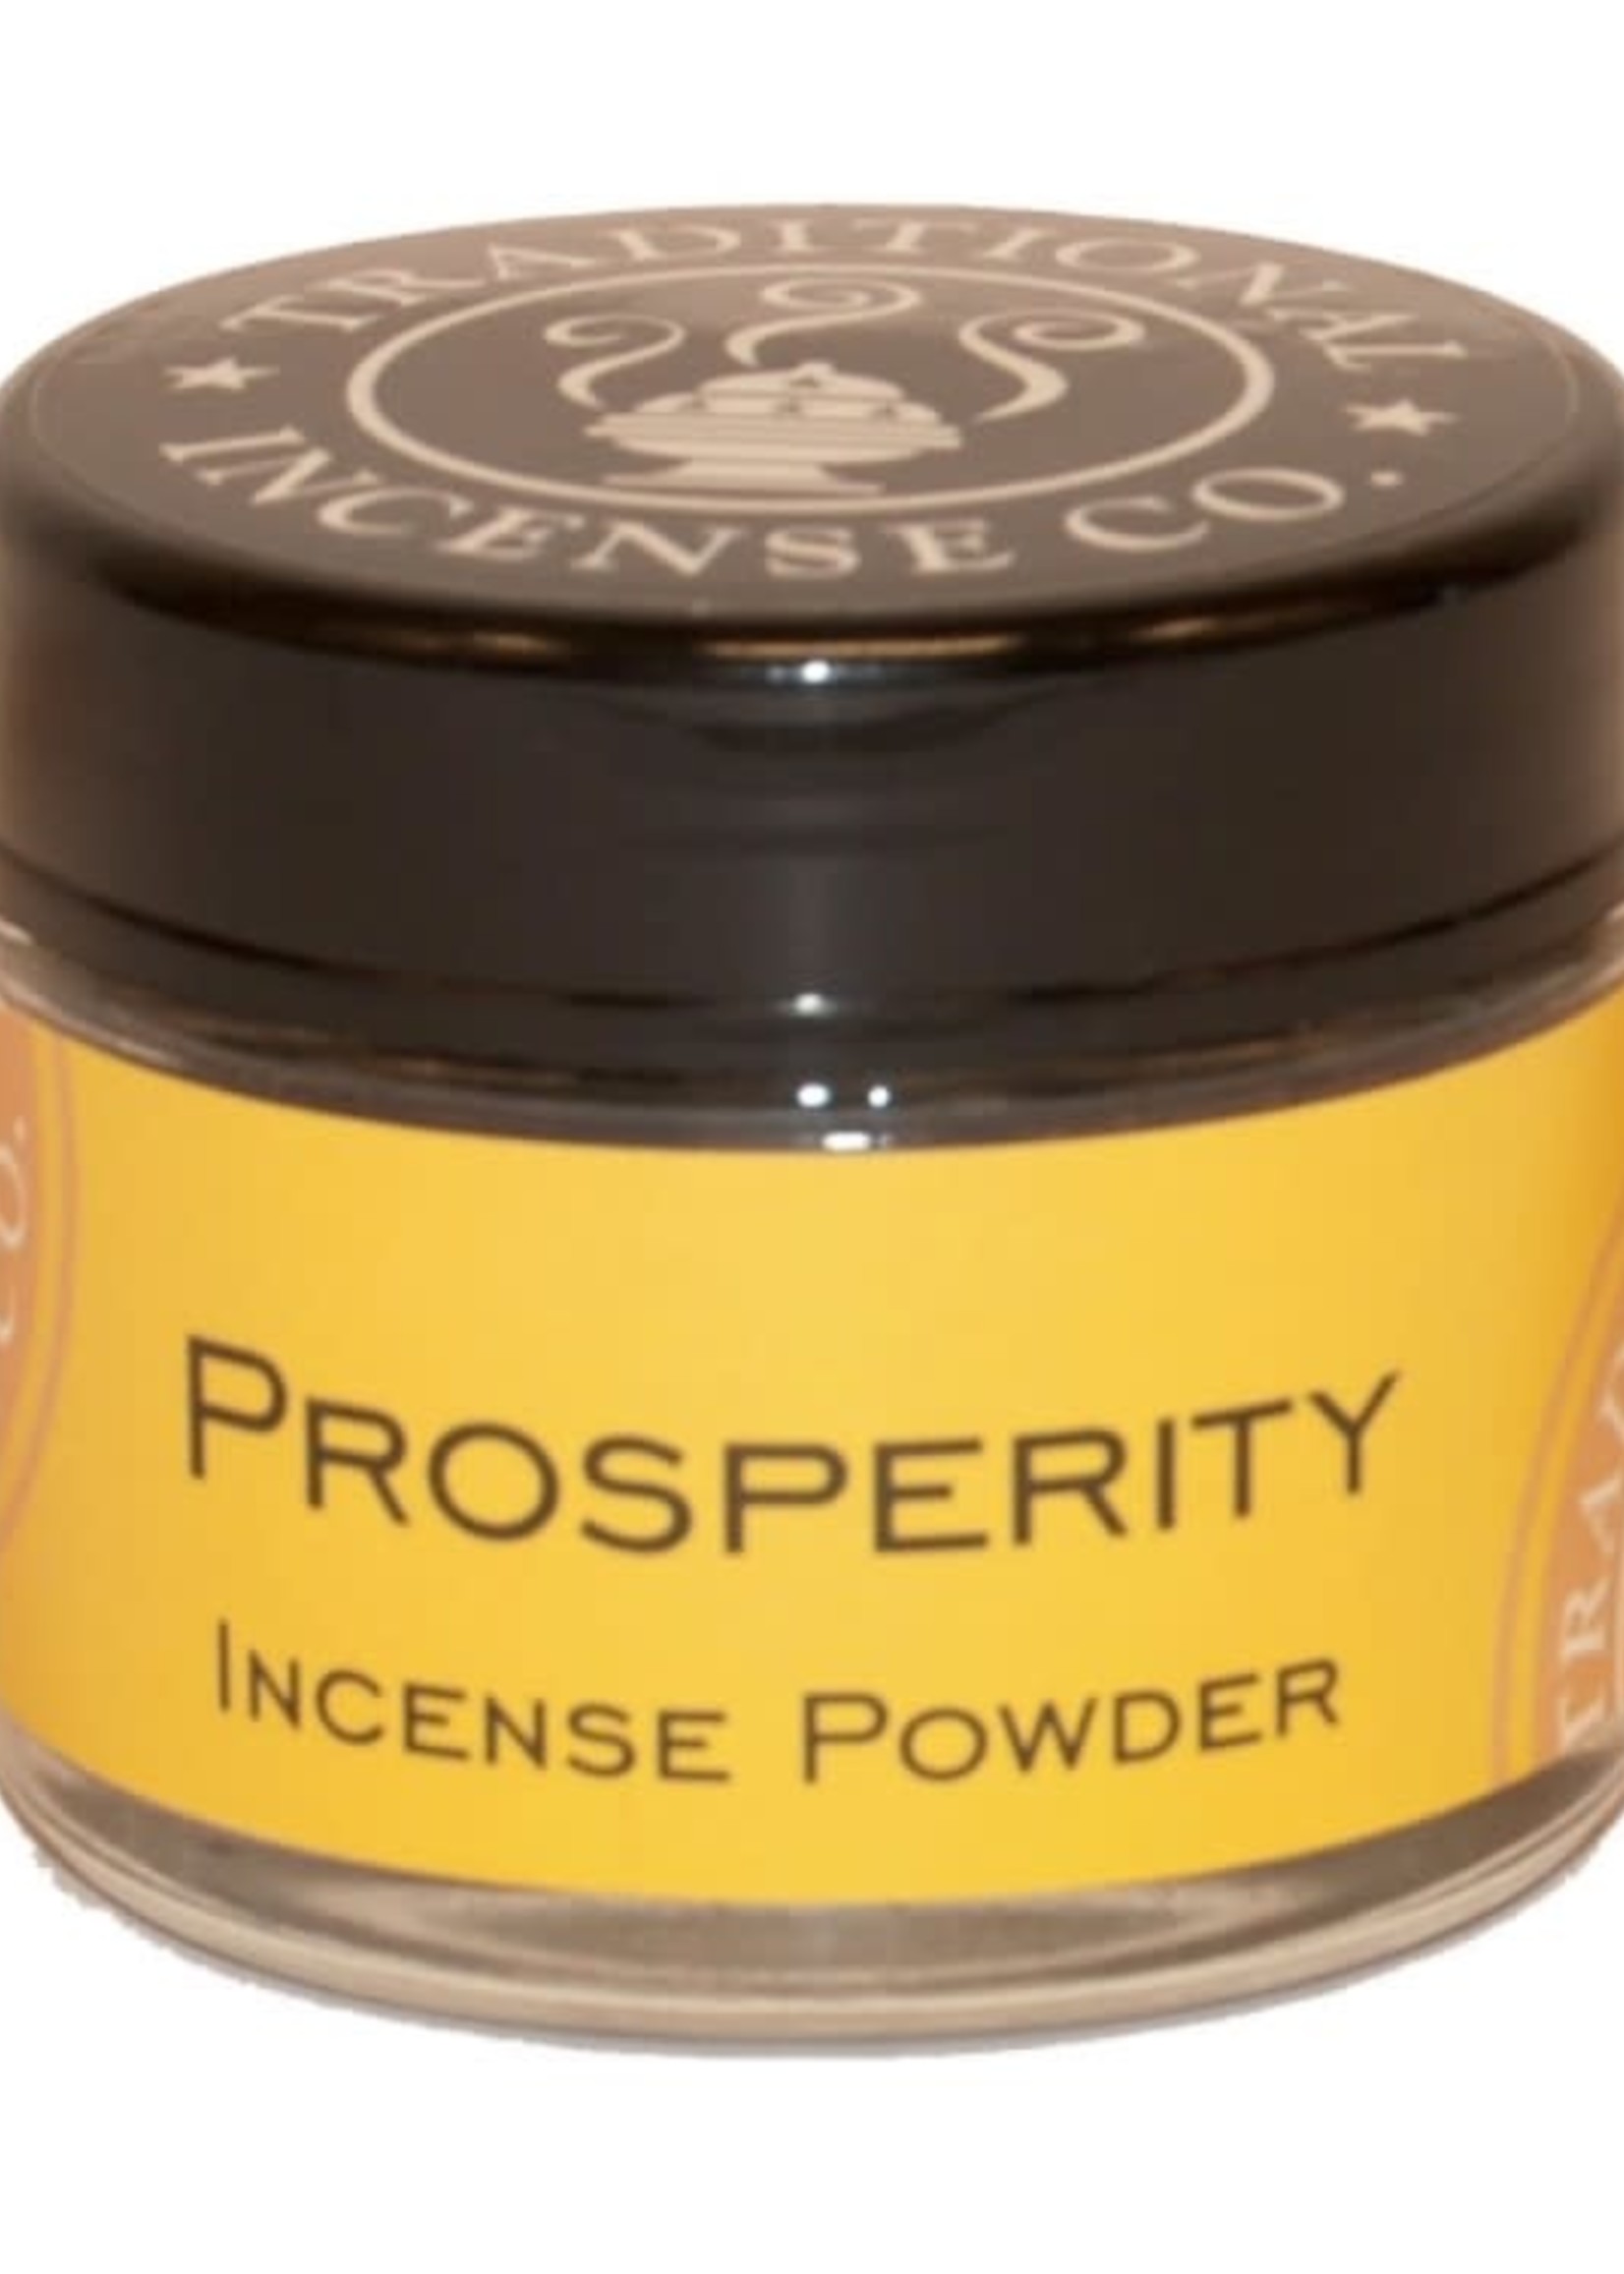 Incense Powder Prosperity 20g